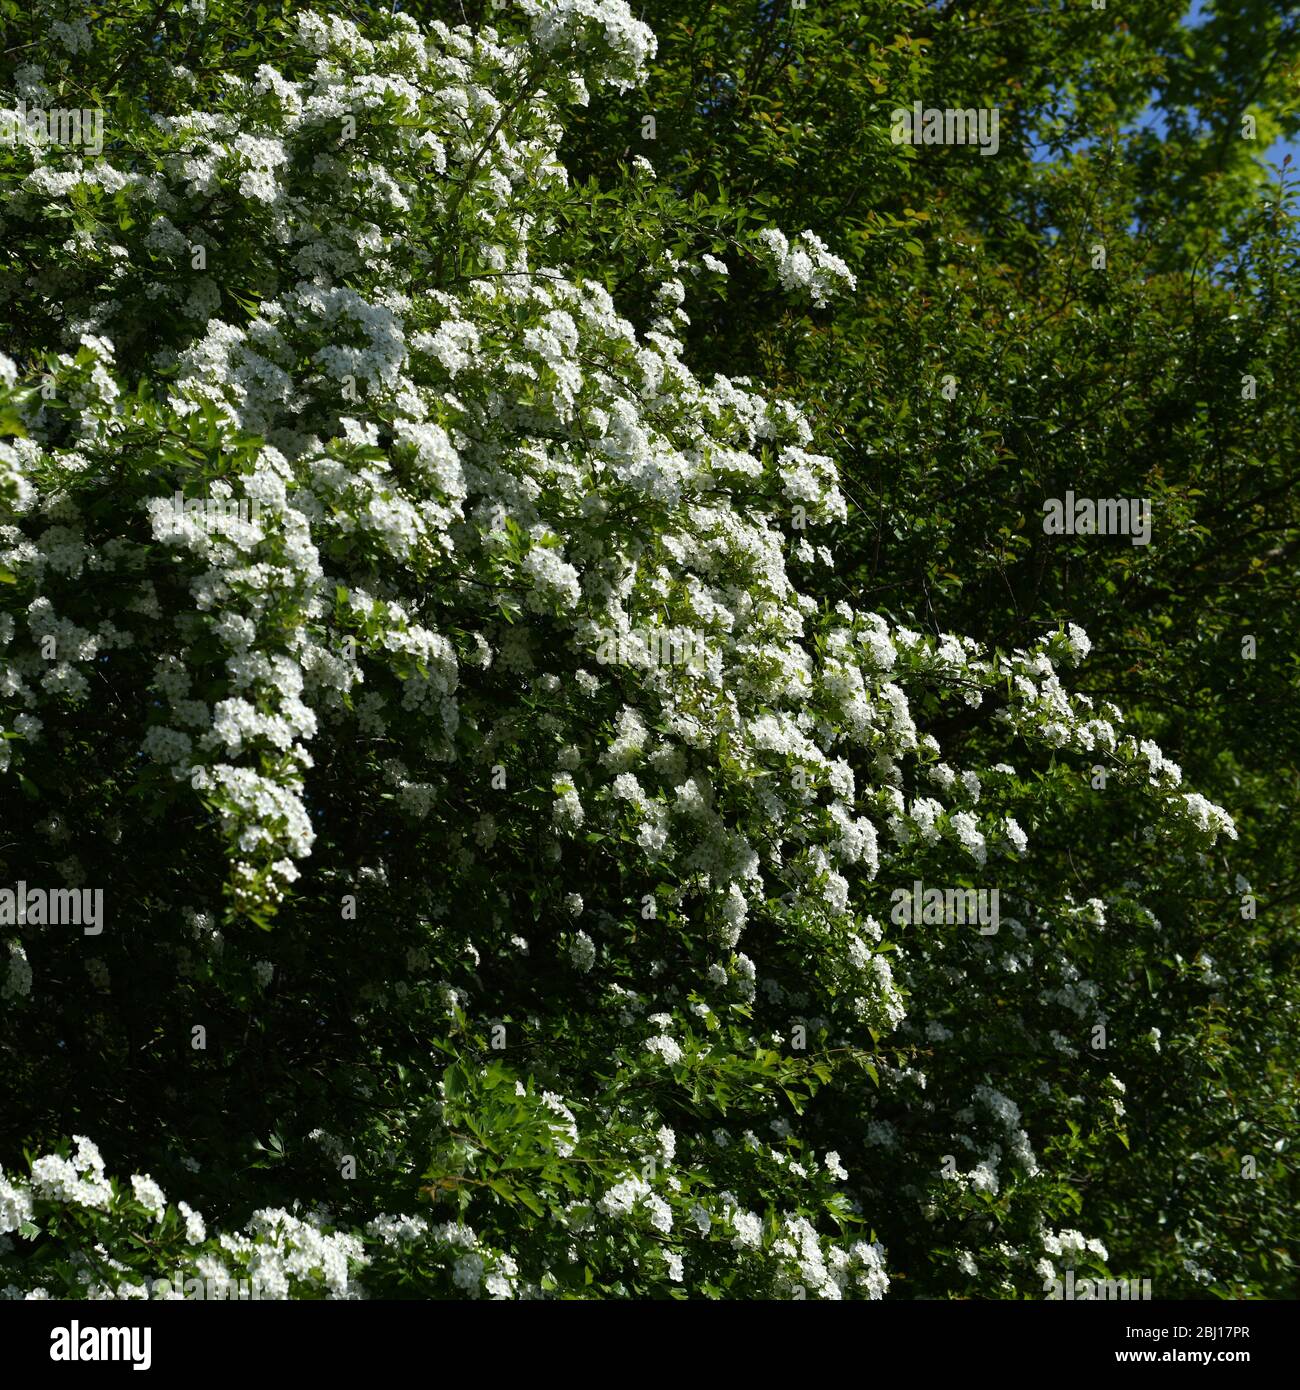 White Hawthorn Blossom Stock Photos White Hawthorn Blossom Stock